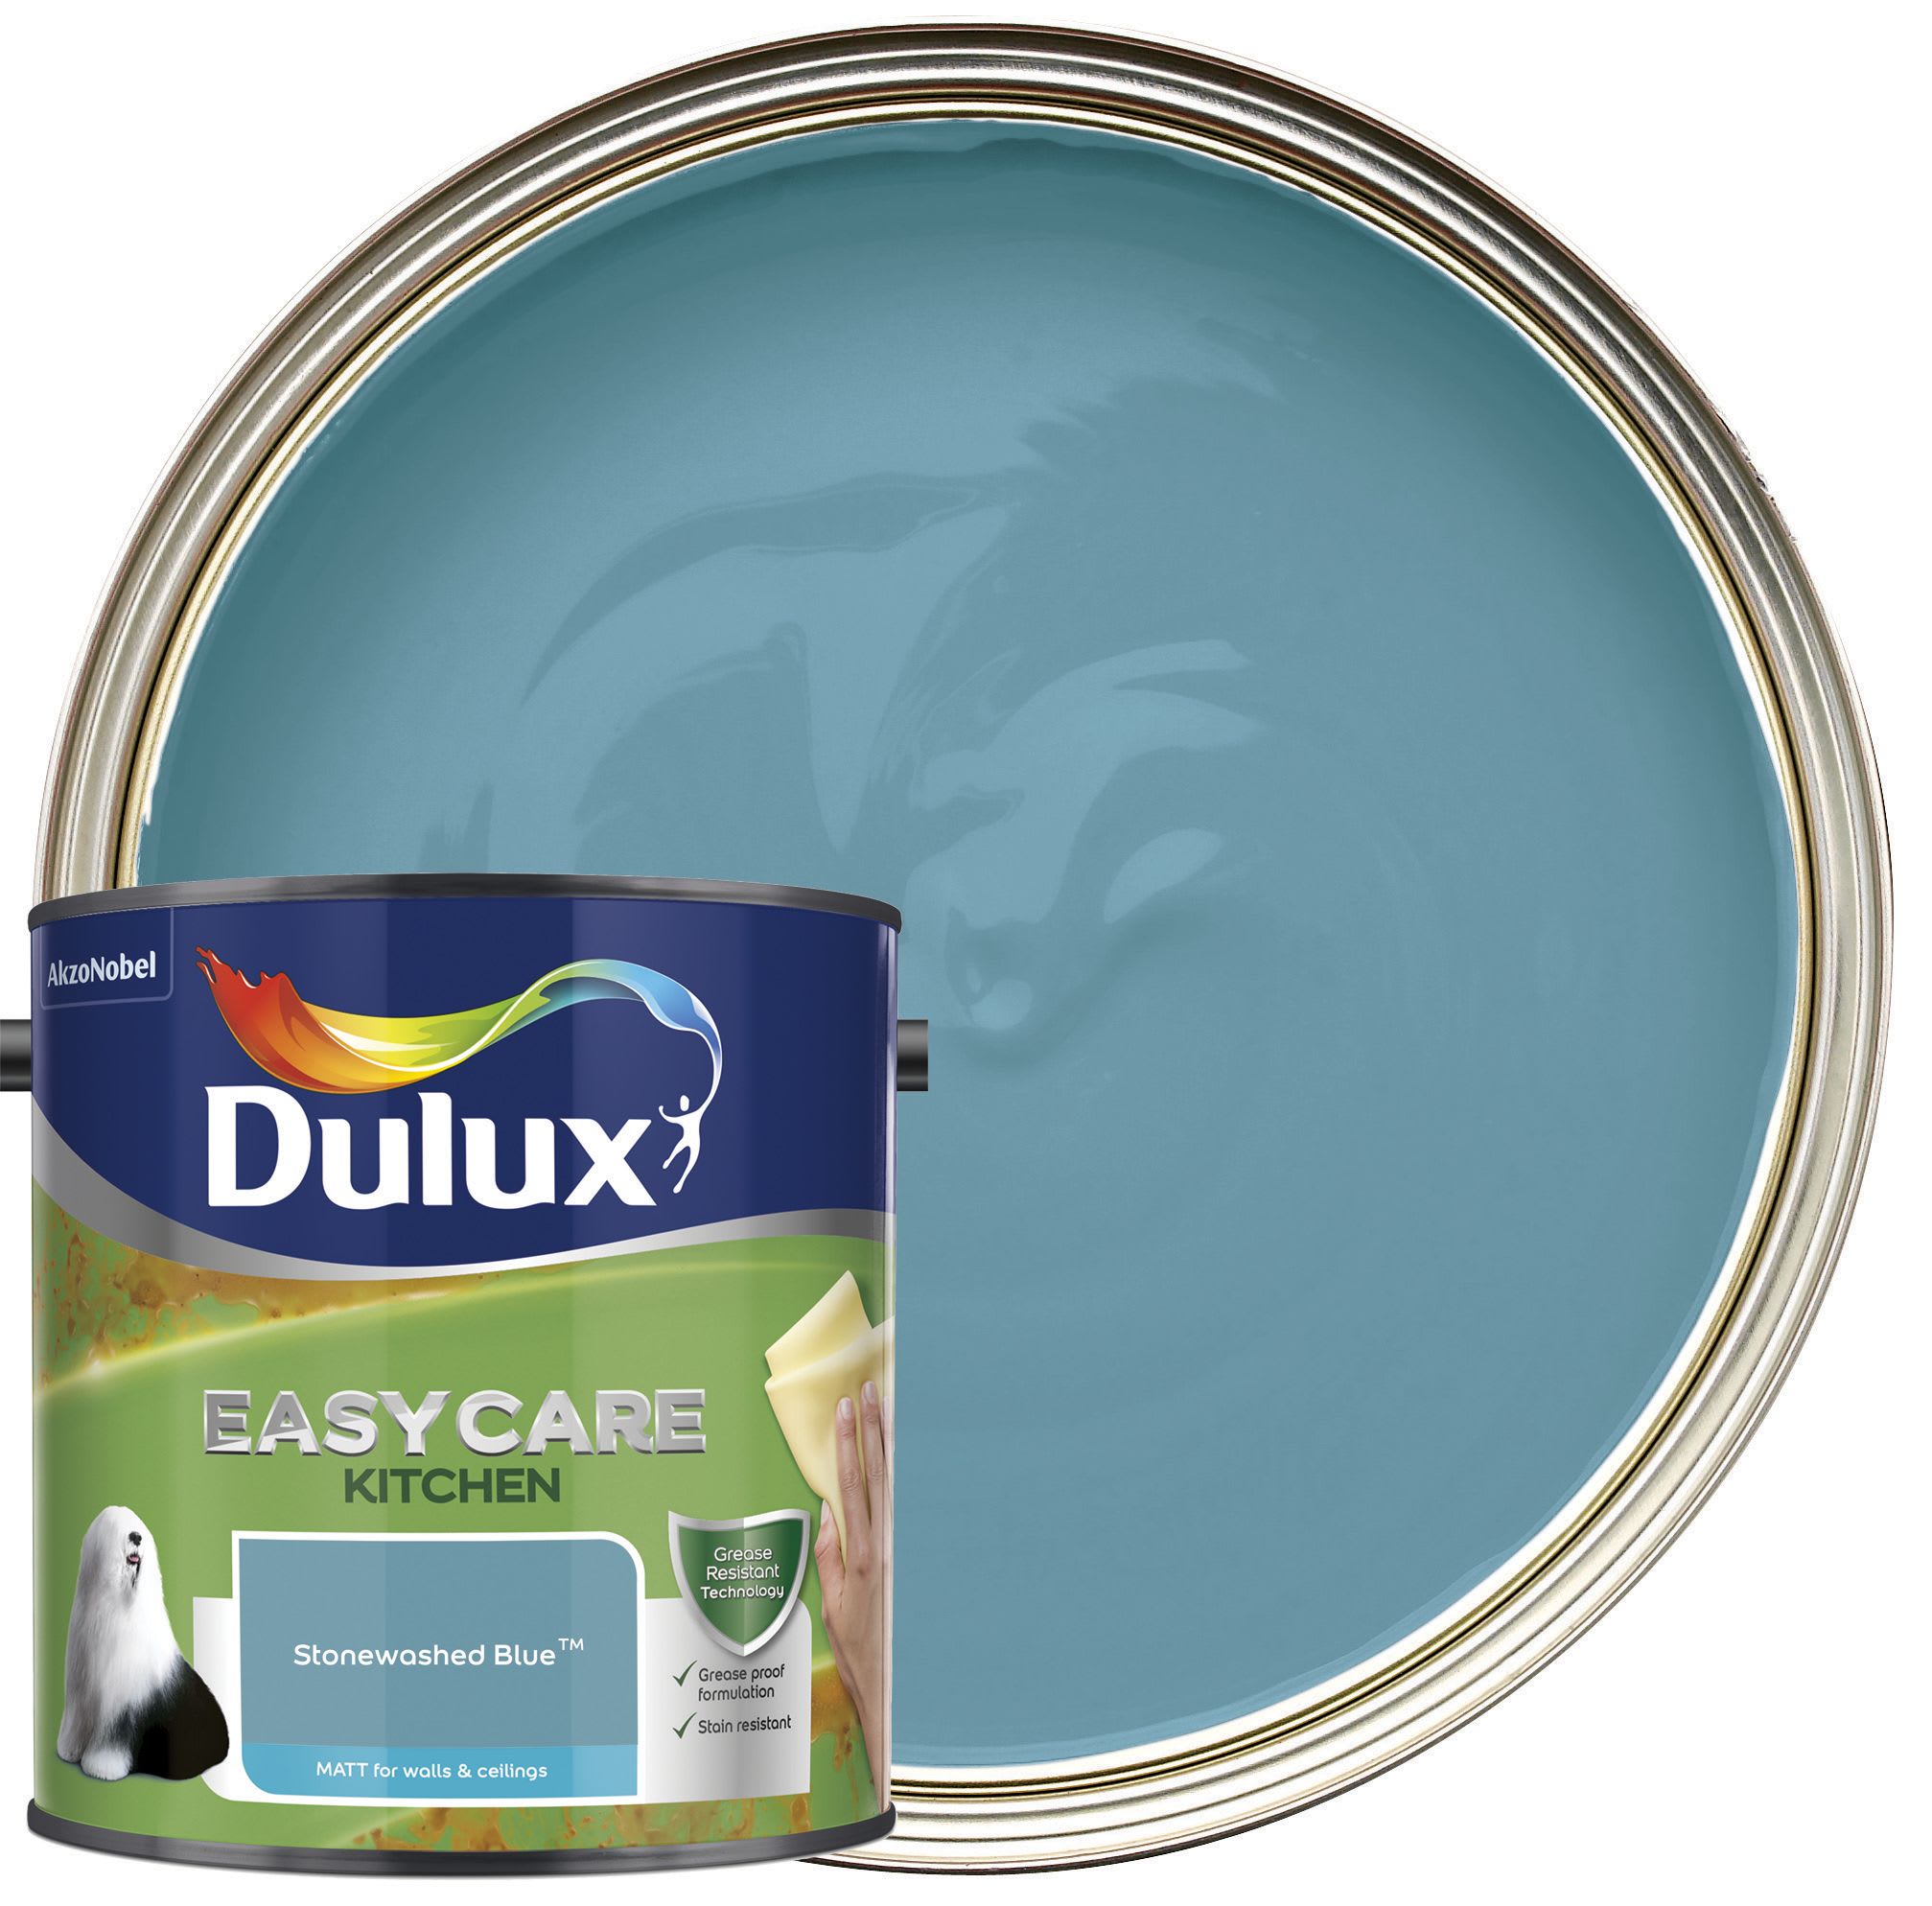 Dulux Easycare Kitchen Matt Emulsion Paint - Stonewashed